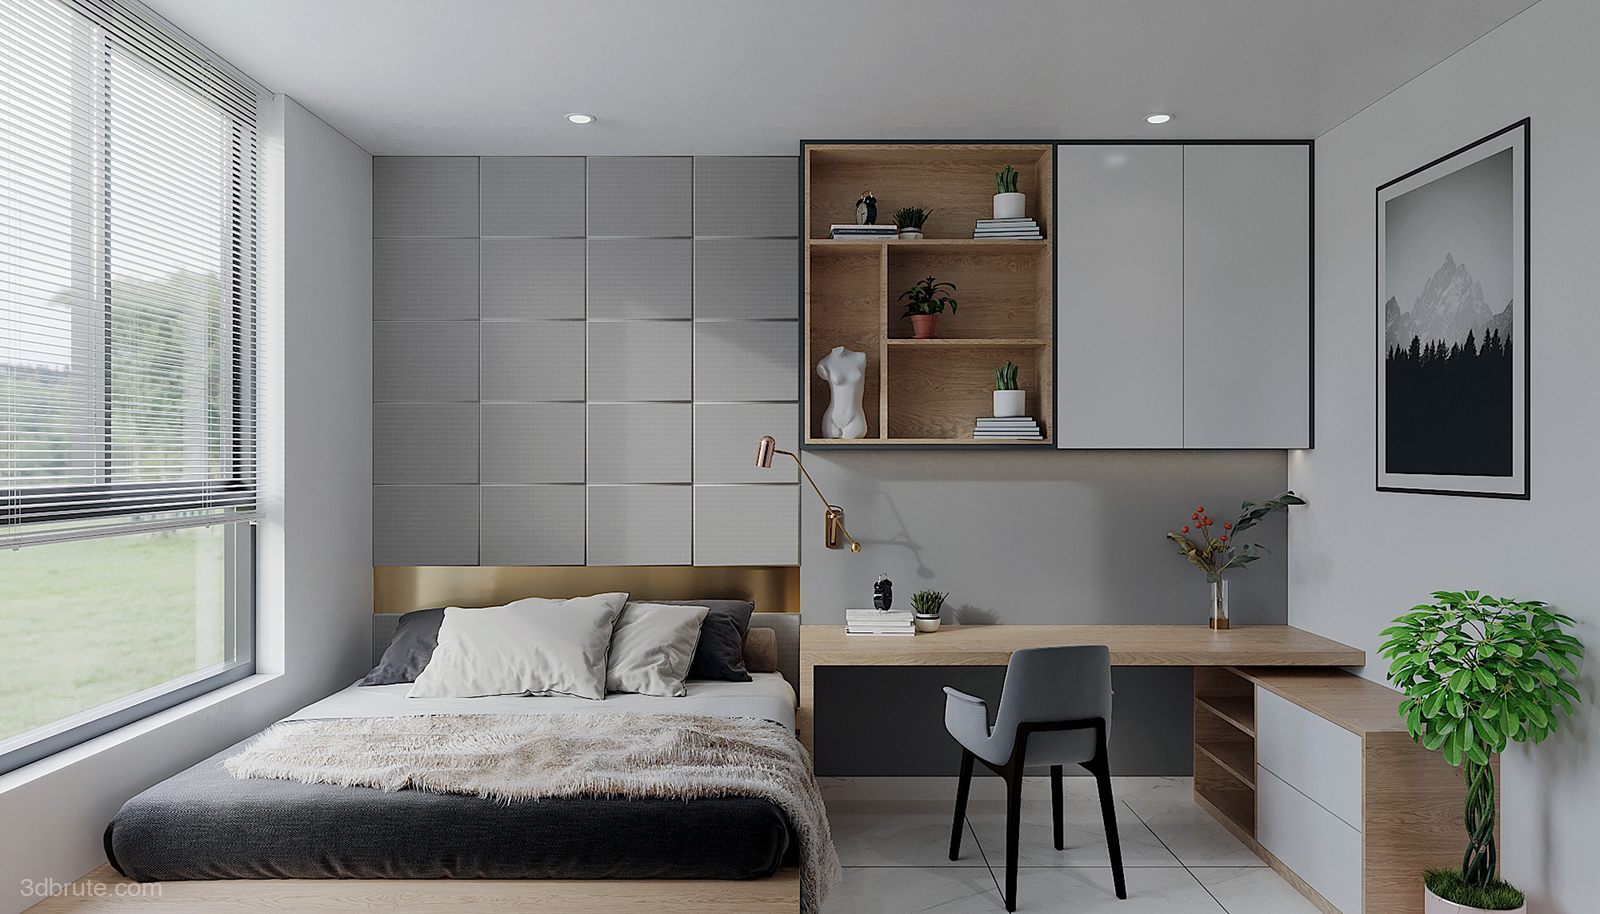 Modern minimalist aesthetics-home is so simple and comfortable idea 3dbrute